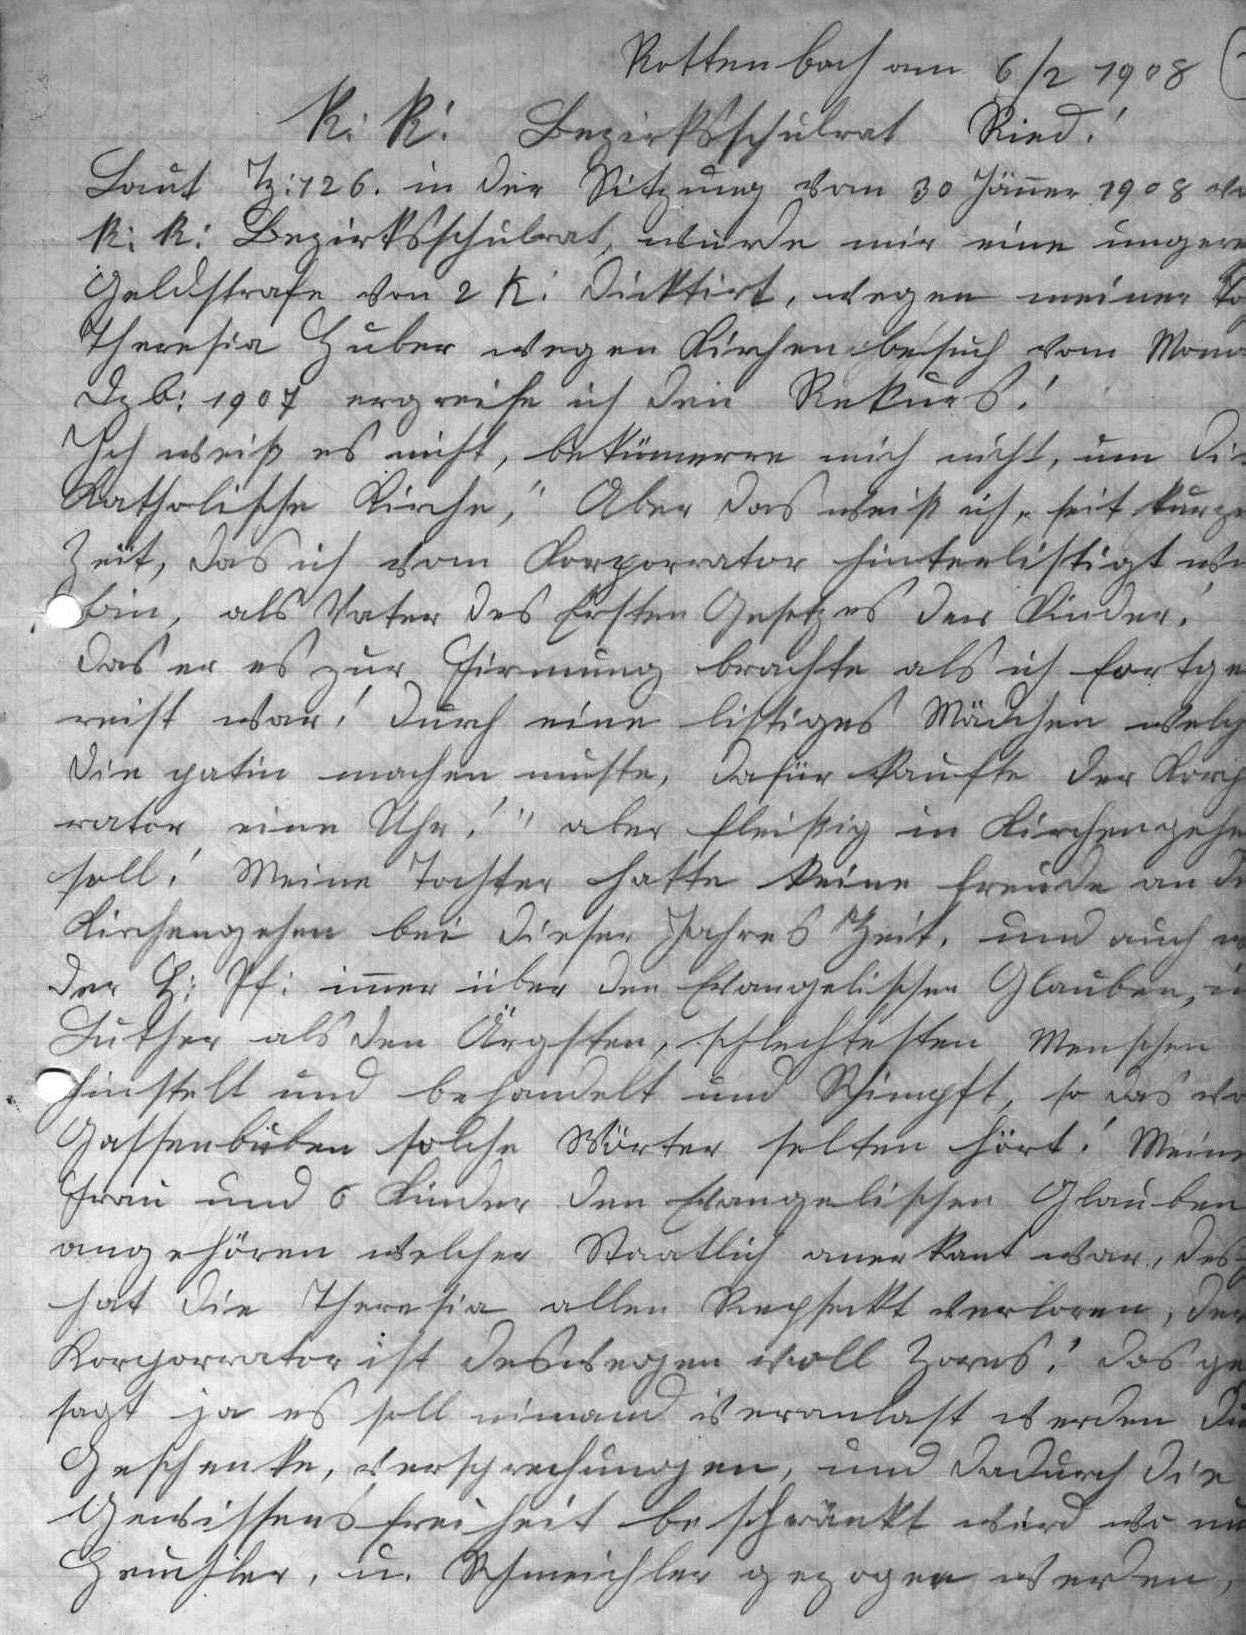 Hubert's Letter to the schoolboard